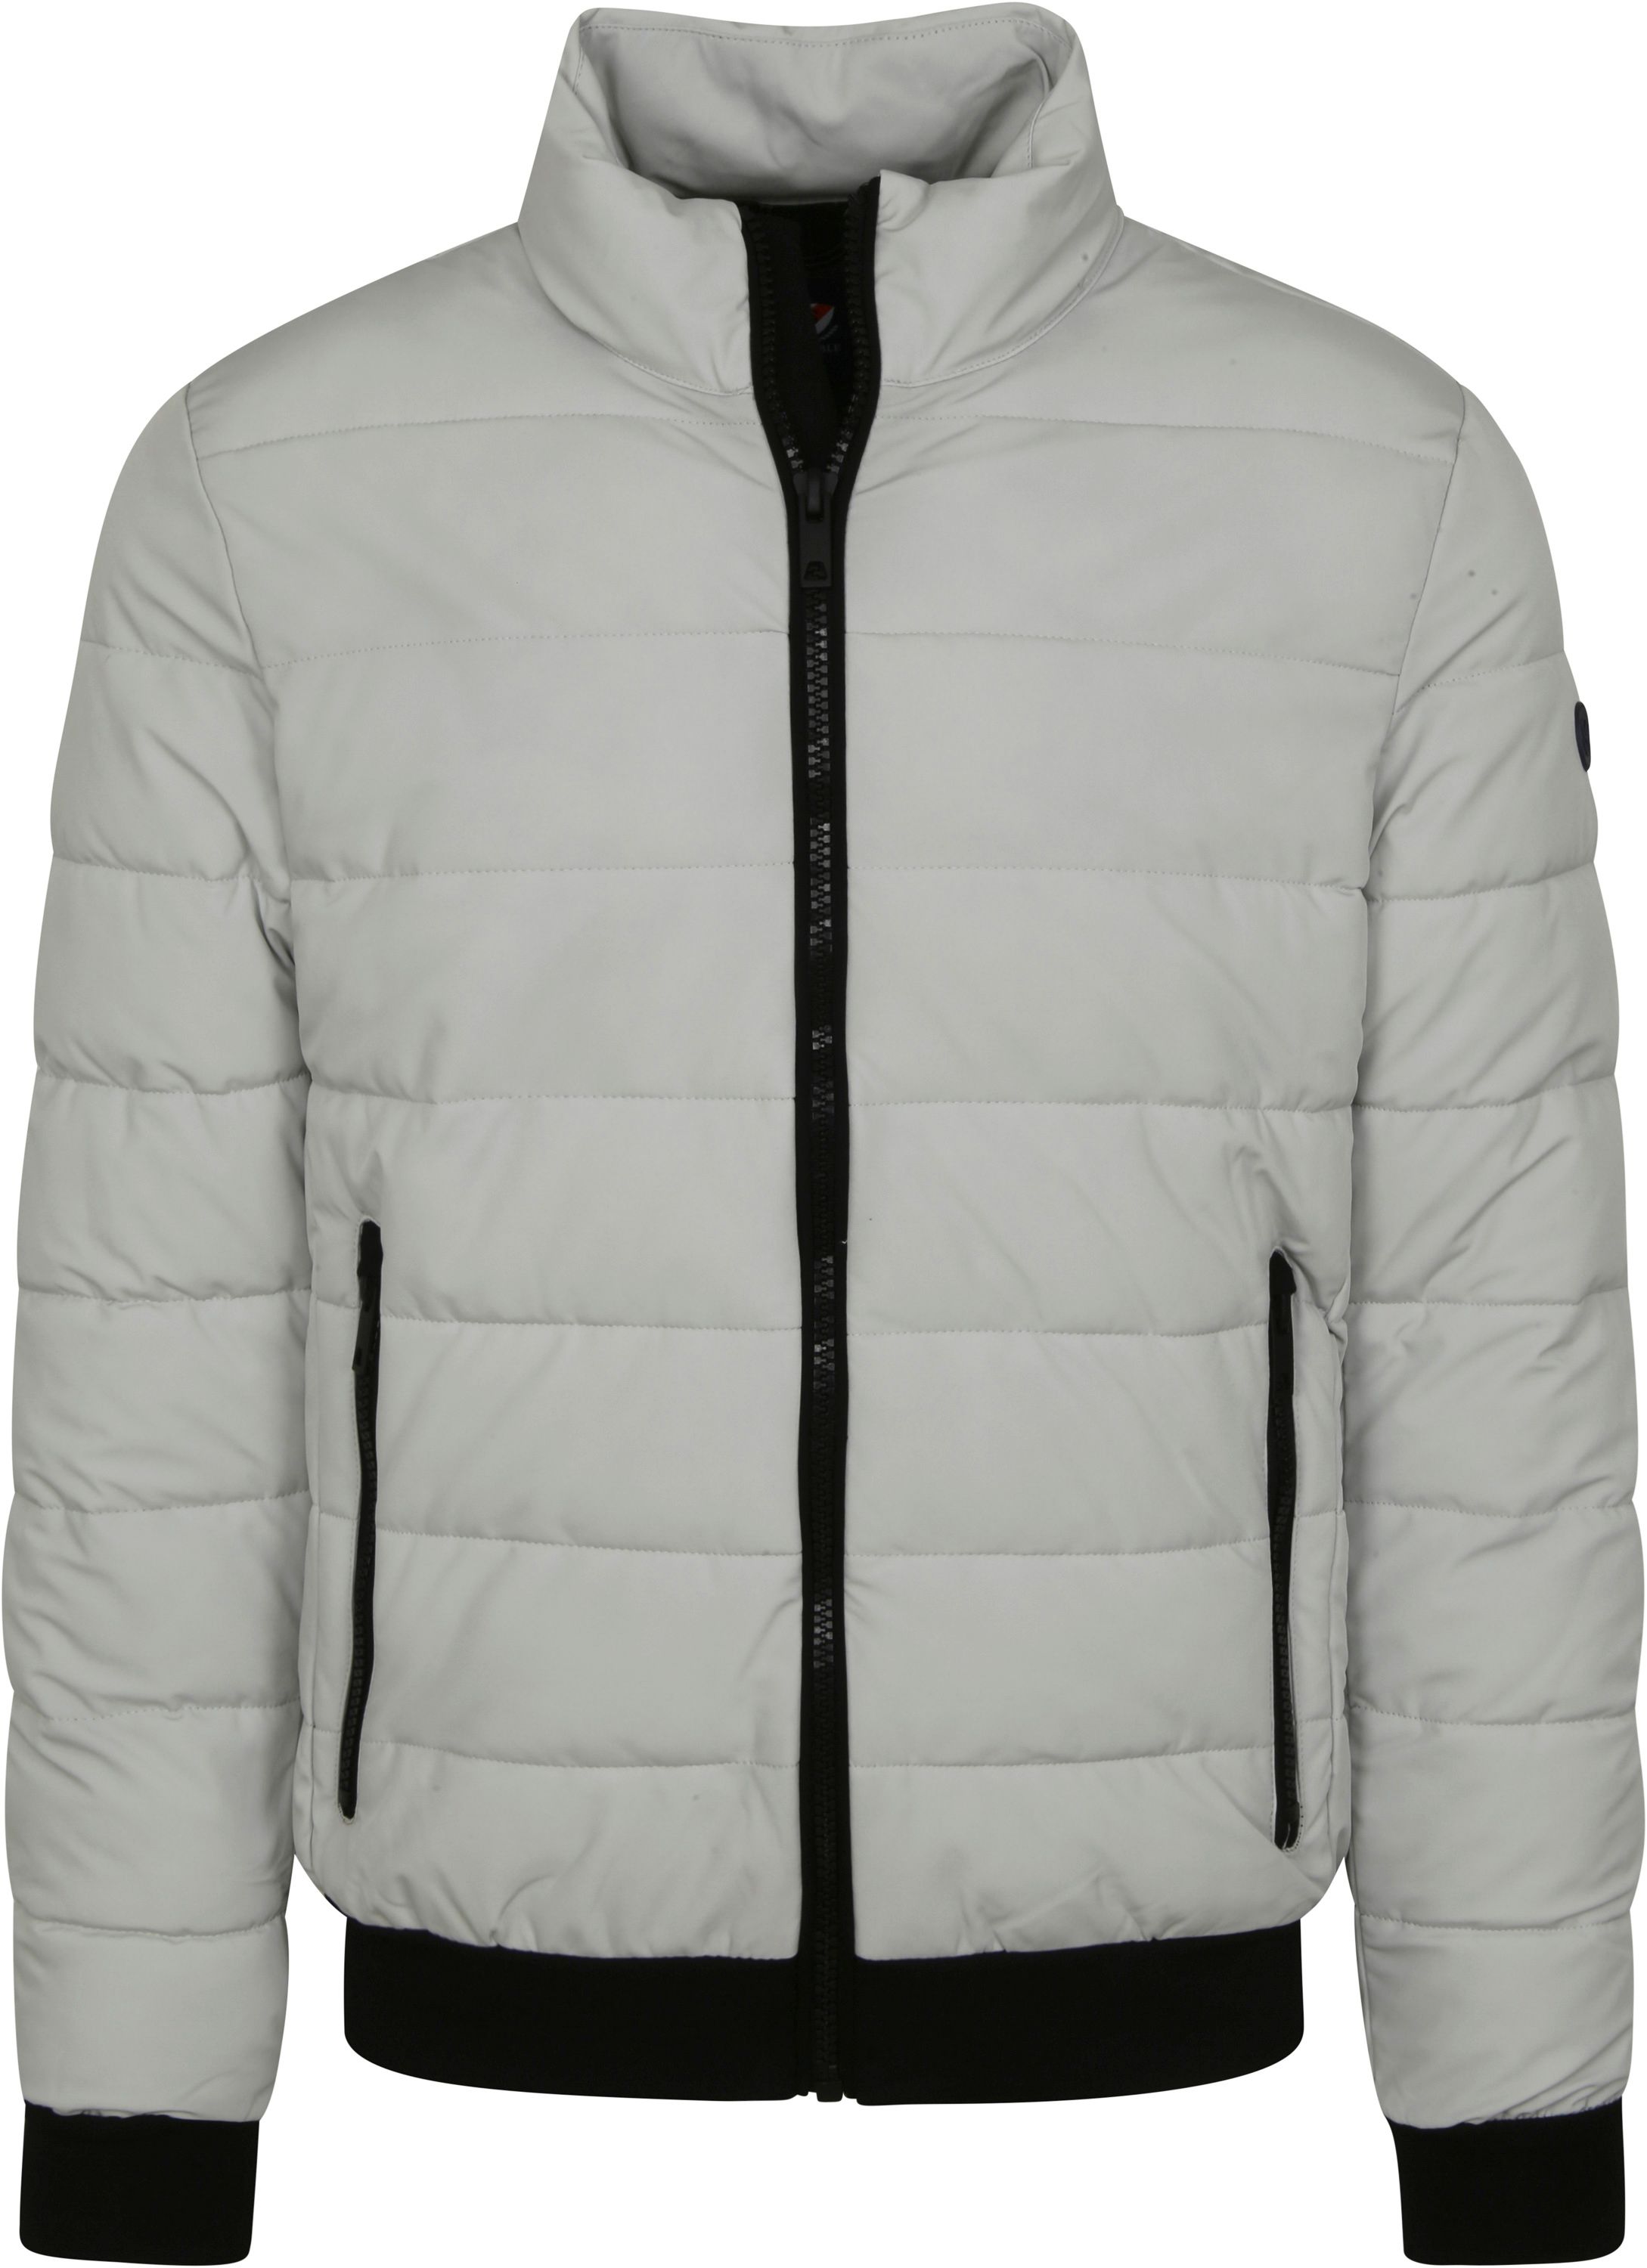 Suitable Surf Jacket Light Grey Off-White size L